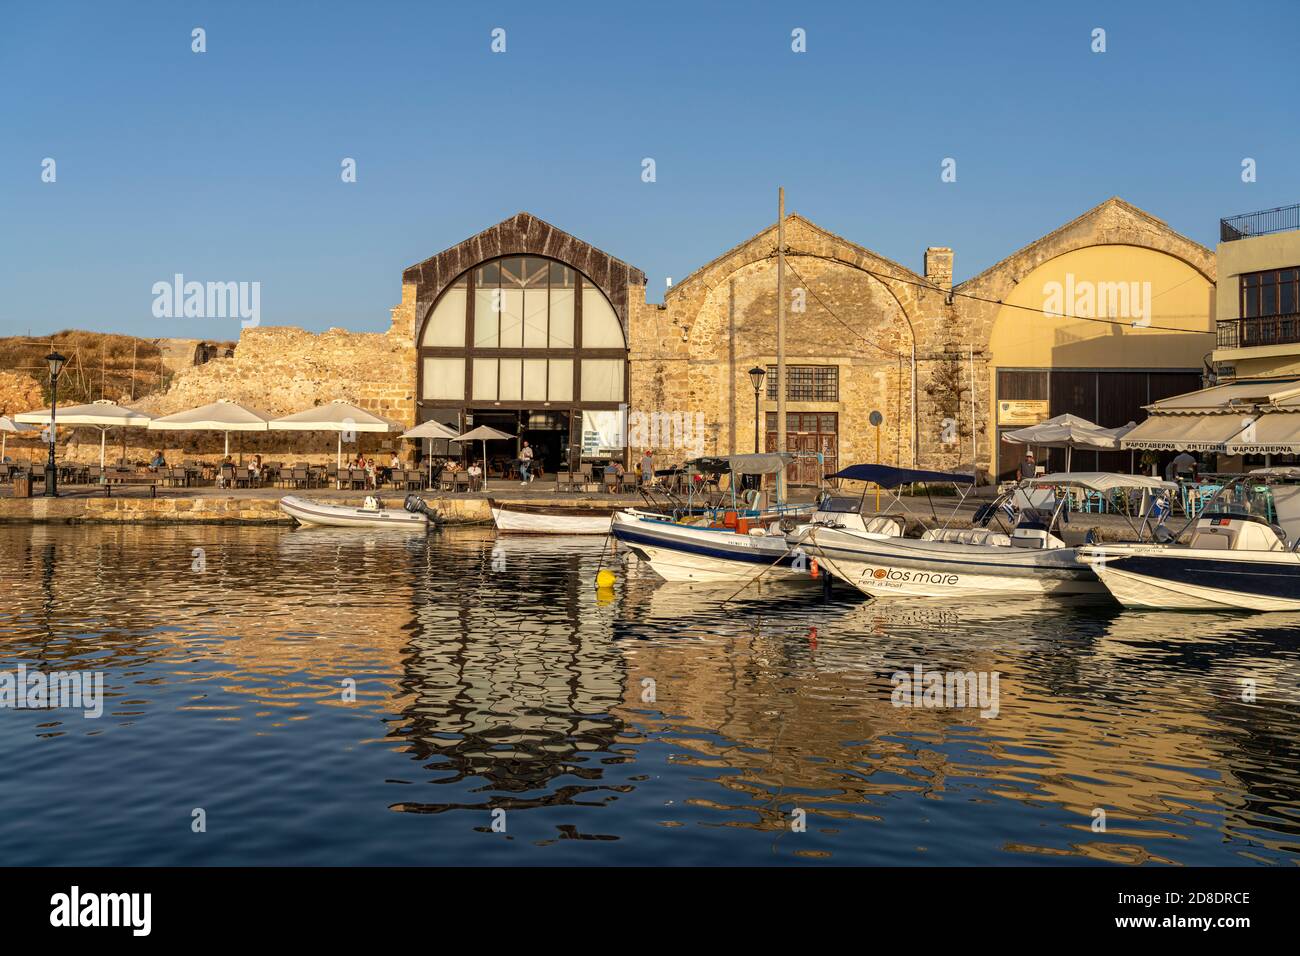 Werften am alten Venezianischen Hafen, Chania, Kreta, Griechenland, Europa   | shipyards  at the Old Venetian Harbour,  Chania, Crete, Greece, Europe Stock Photo